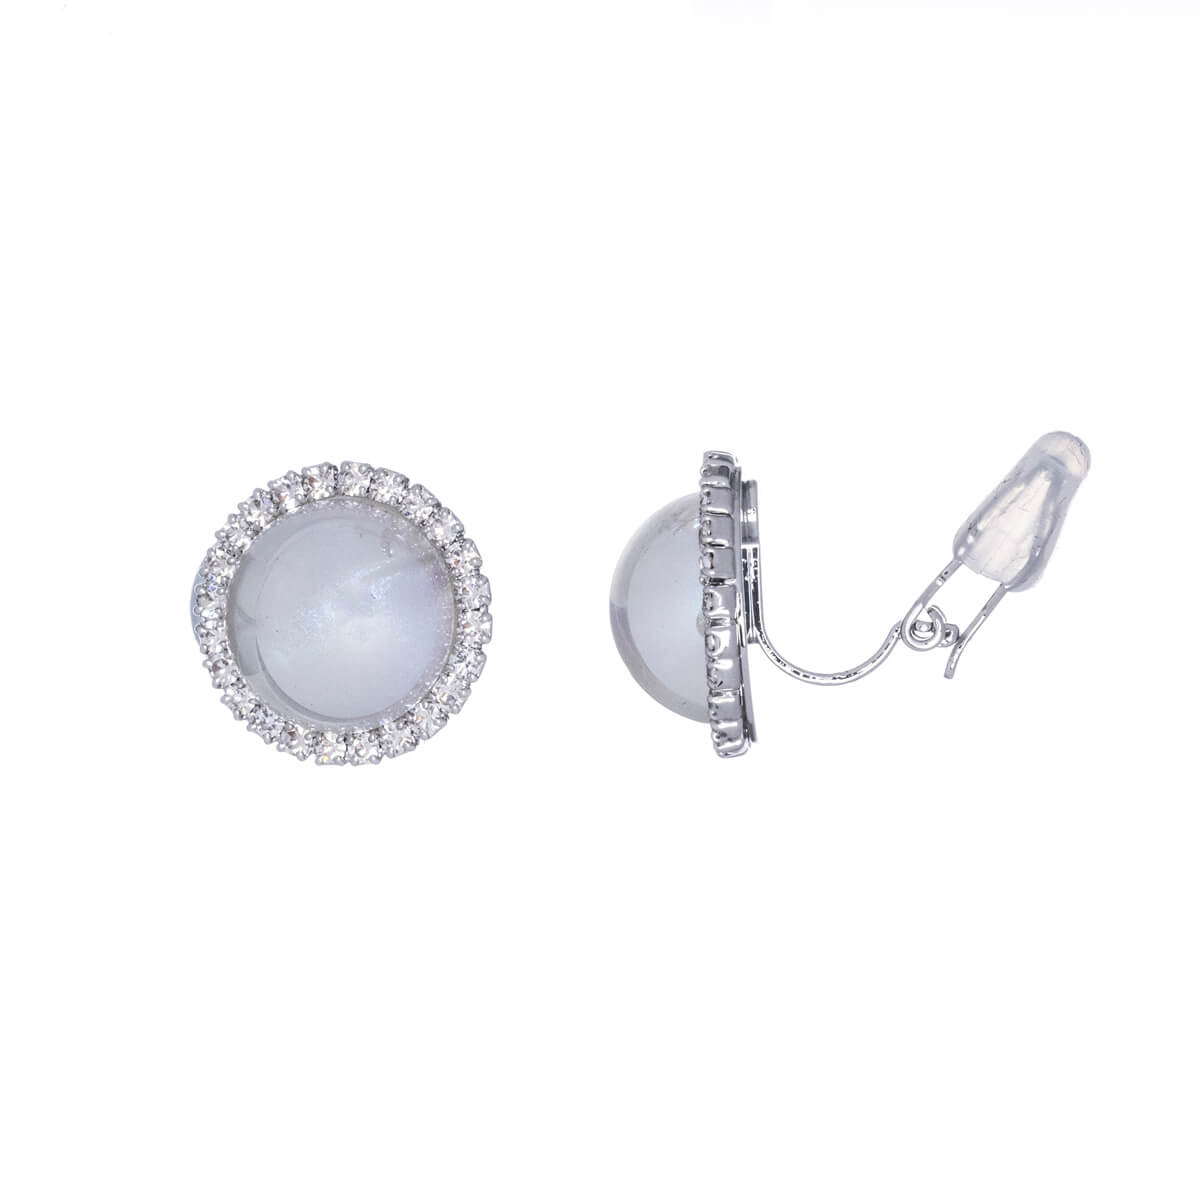 Pearl clip earrings with zirconia rim